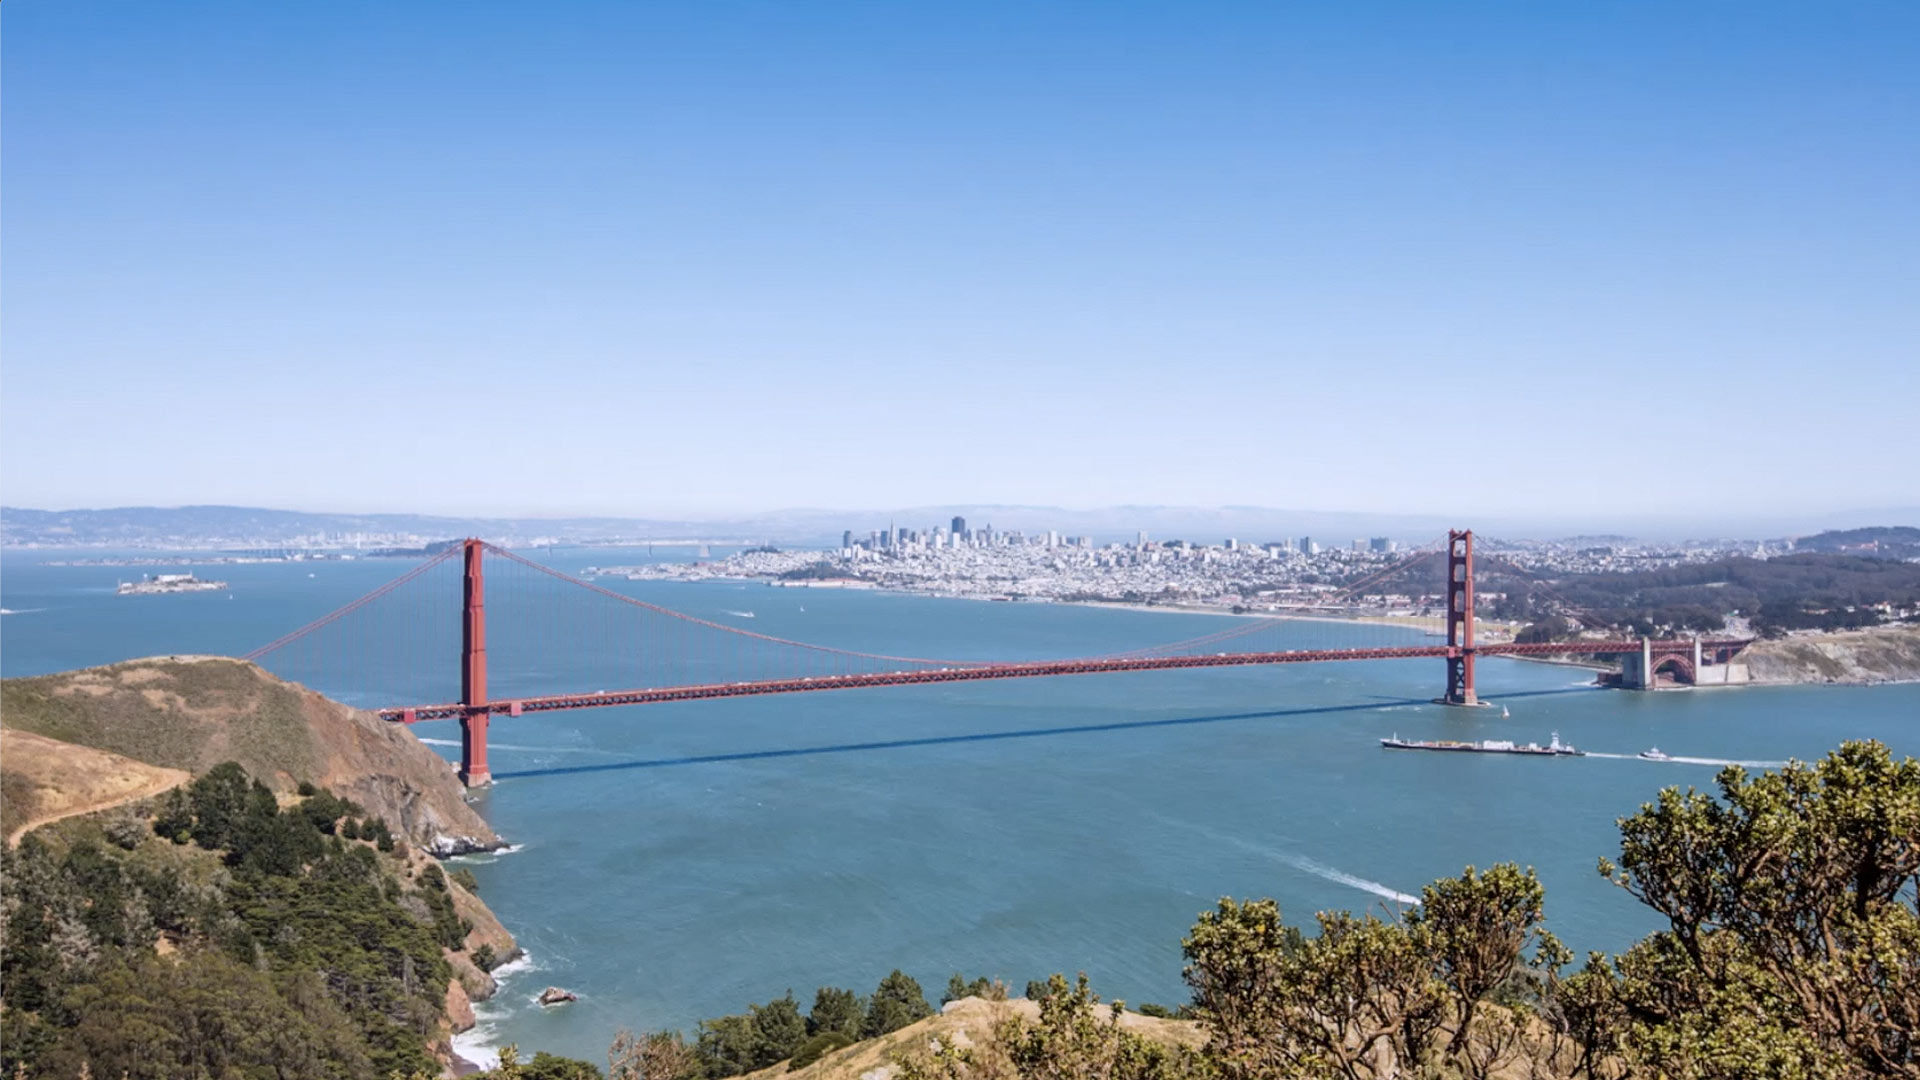 The San Francisco Golden Gate Bridge on a sunny bright day.